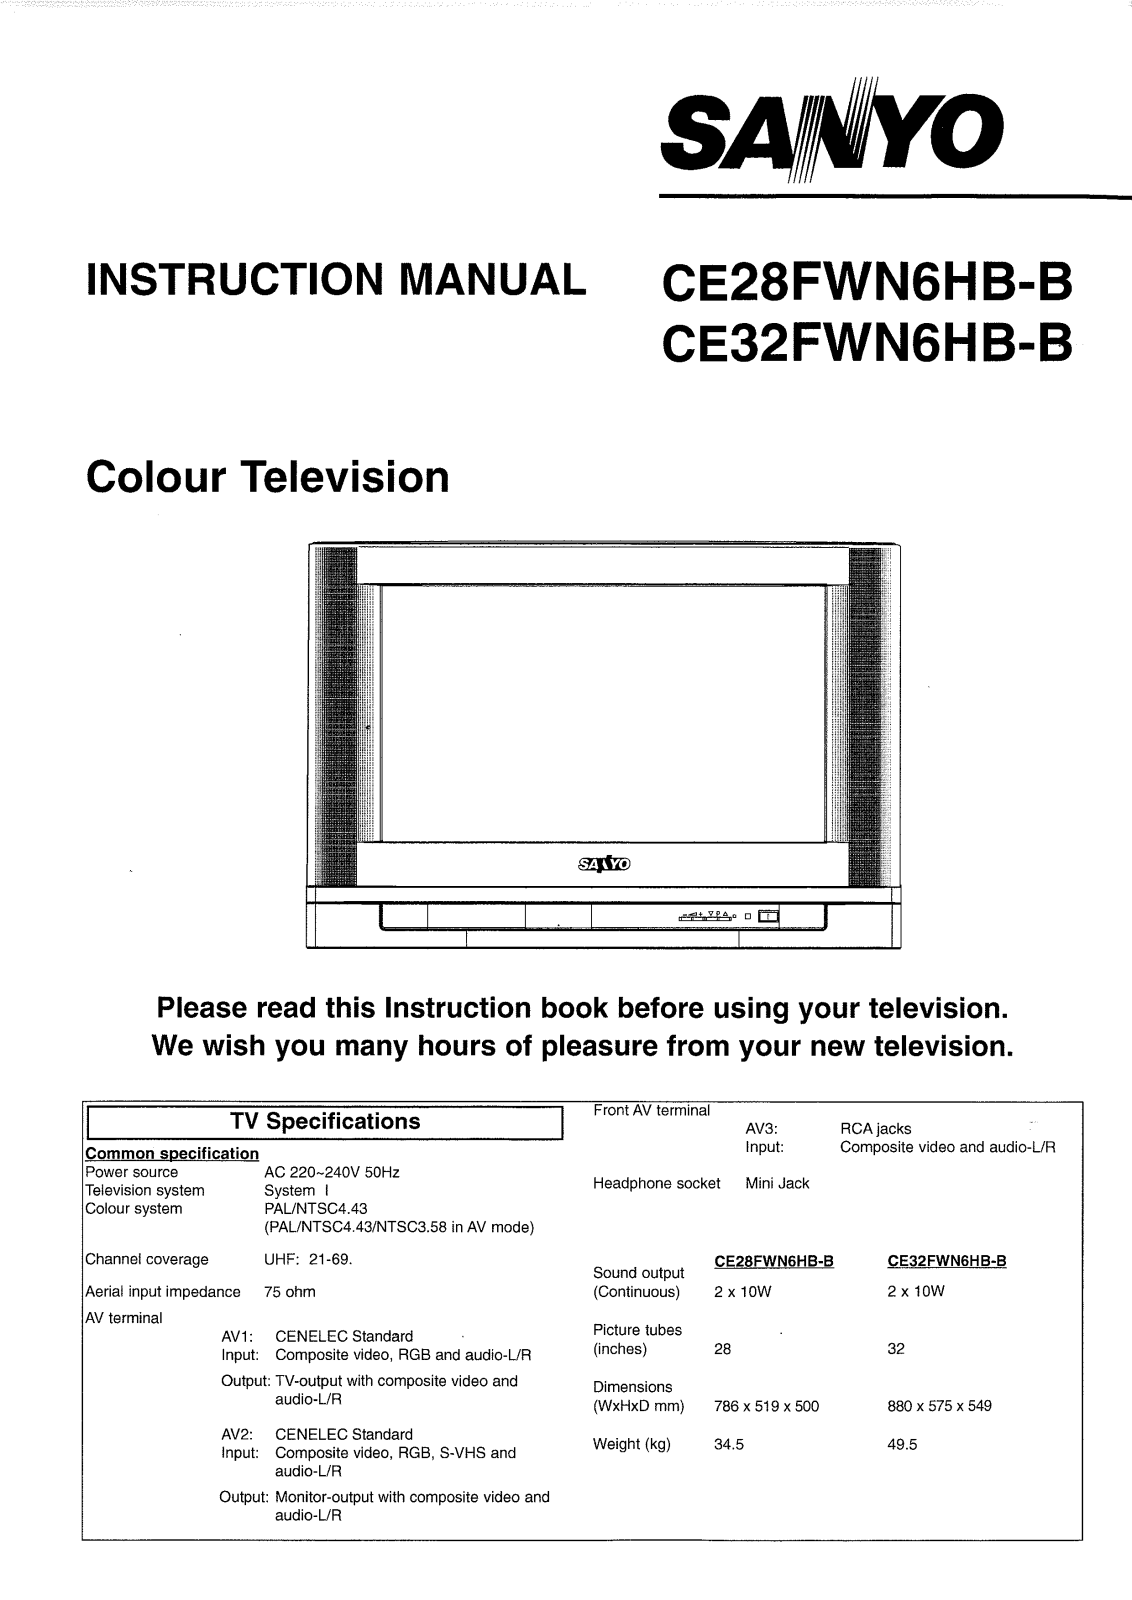 Sanyo CE28FWN6HB-B, CE32FWN6HB-B Instruction Manual